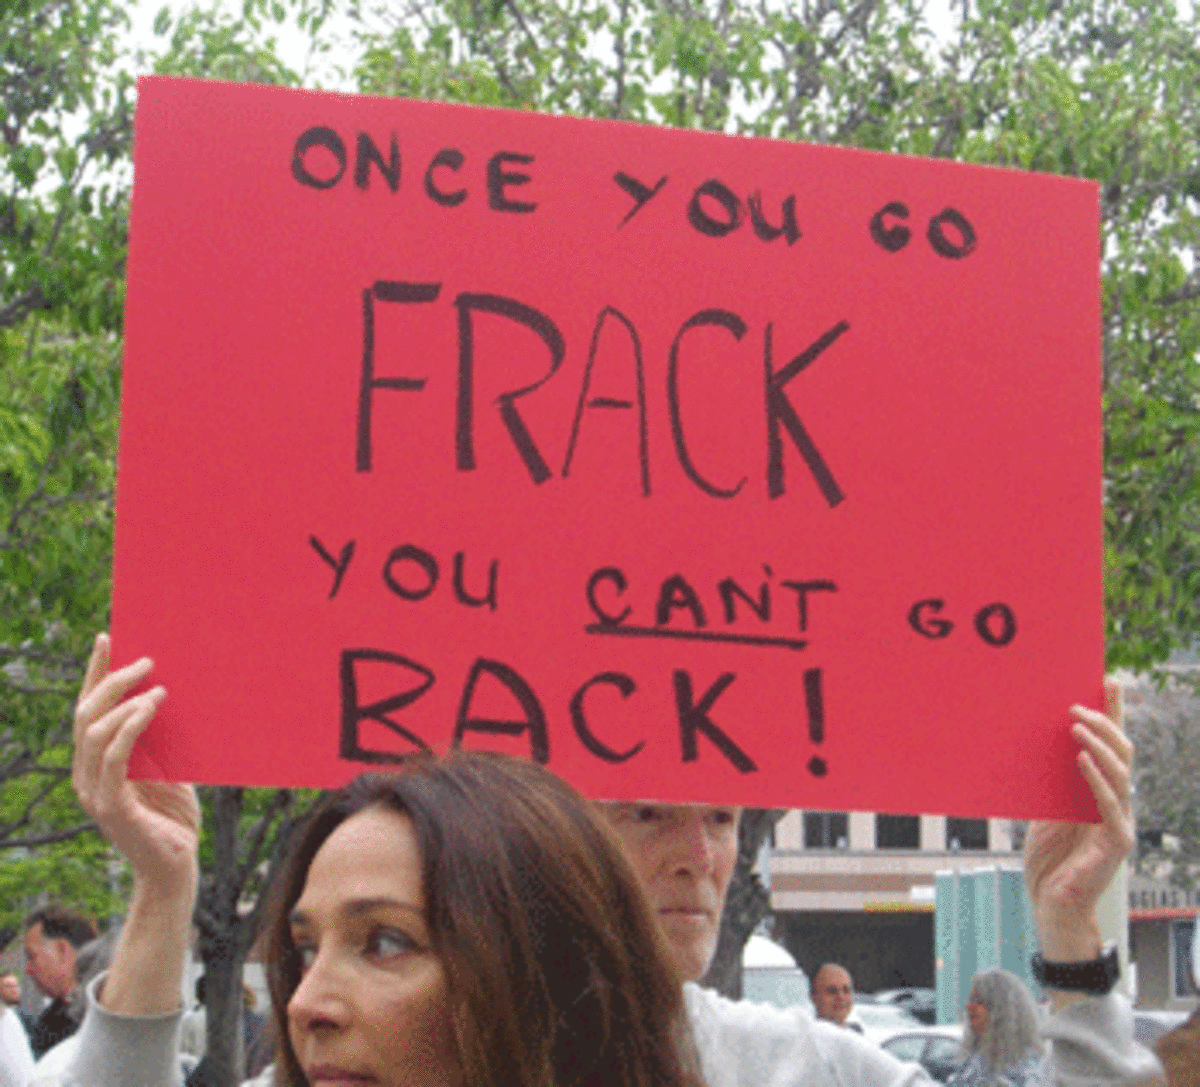 frack back